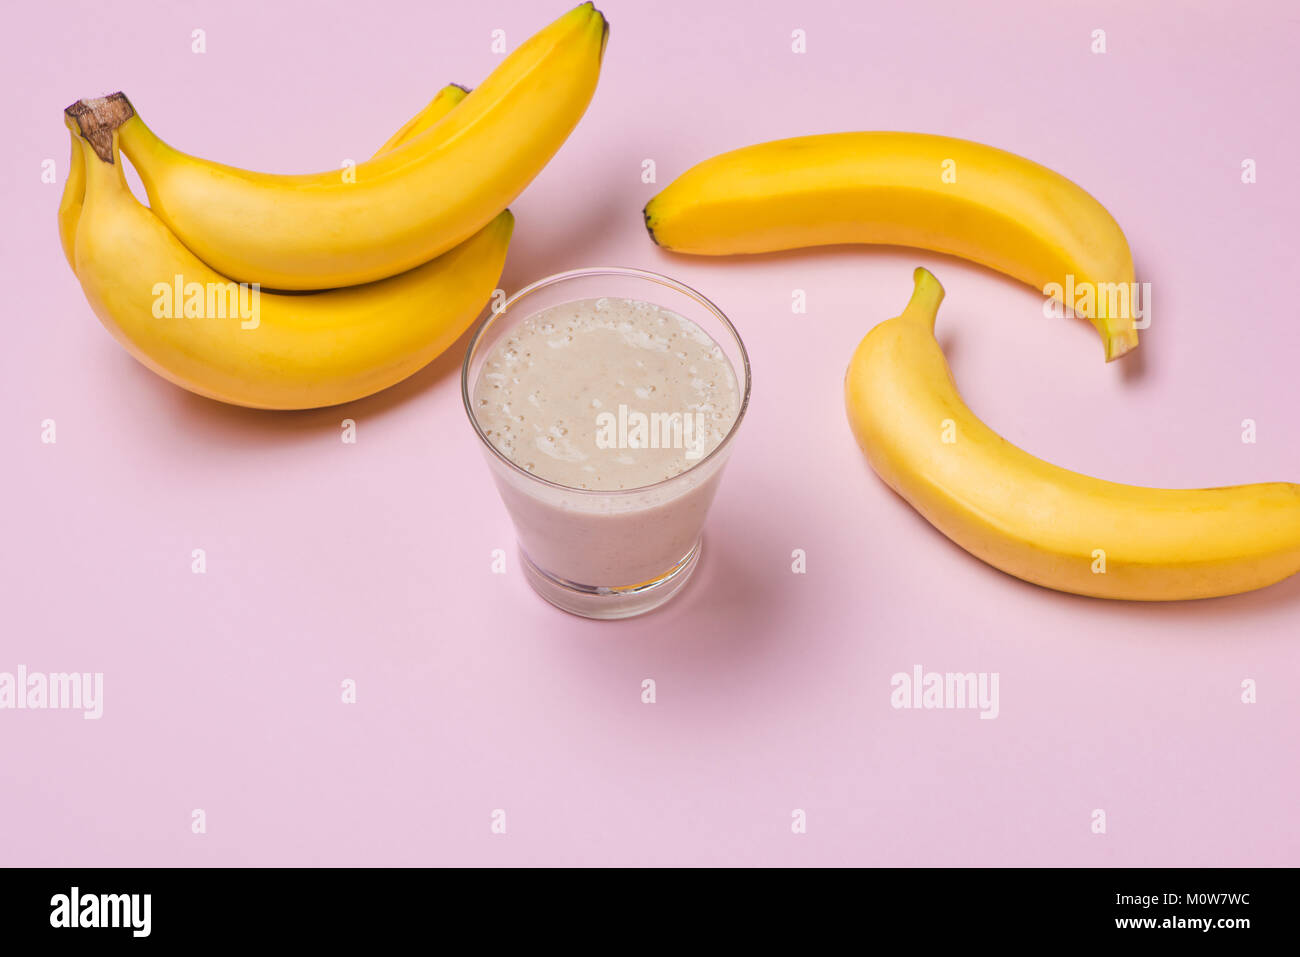 Fresh made Banana smoothie on pink background Stock Photo